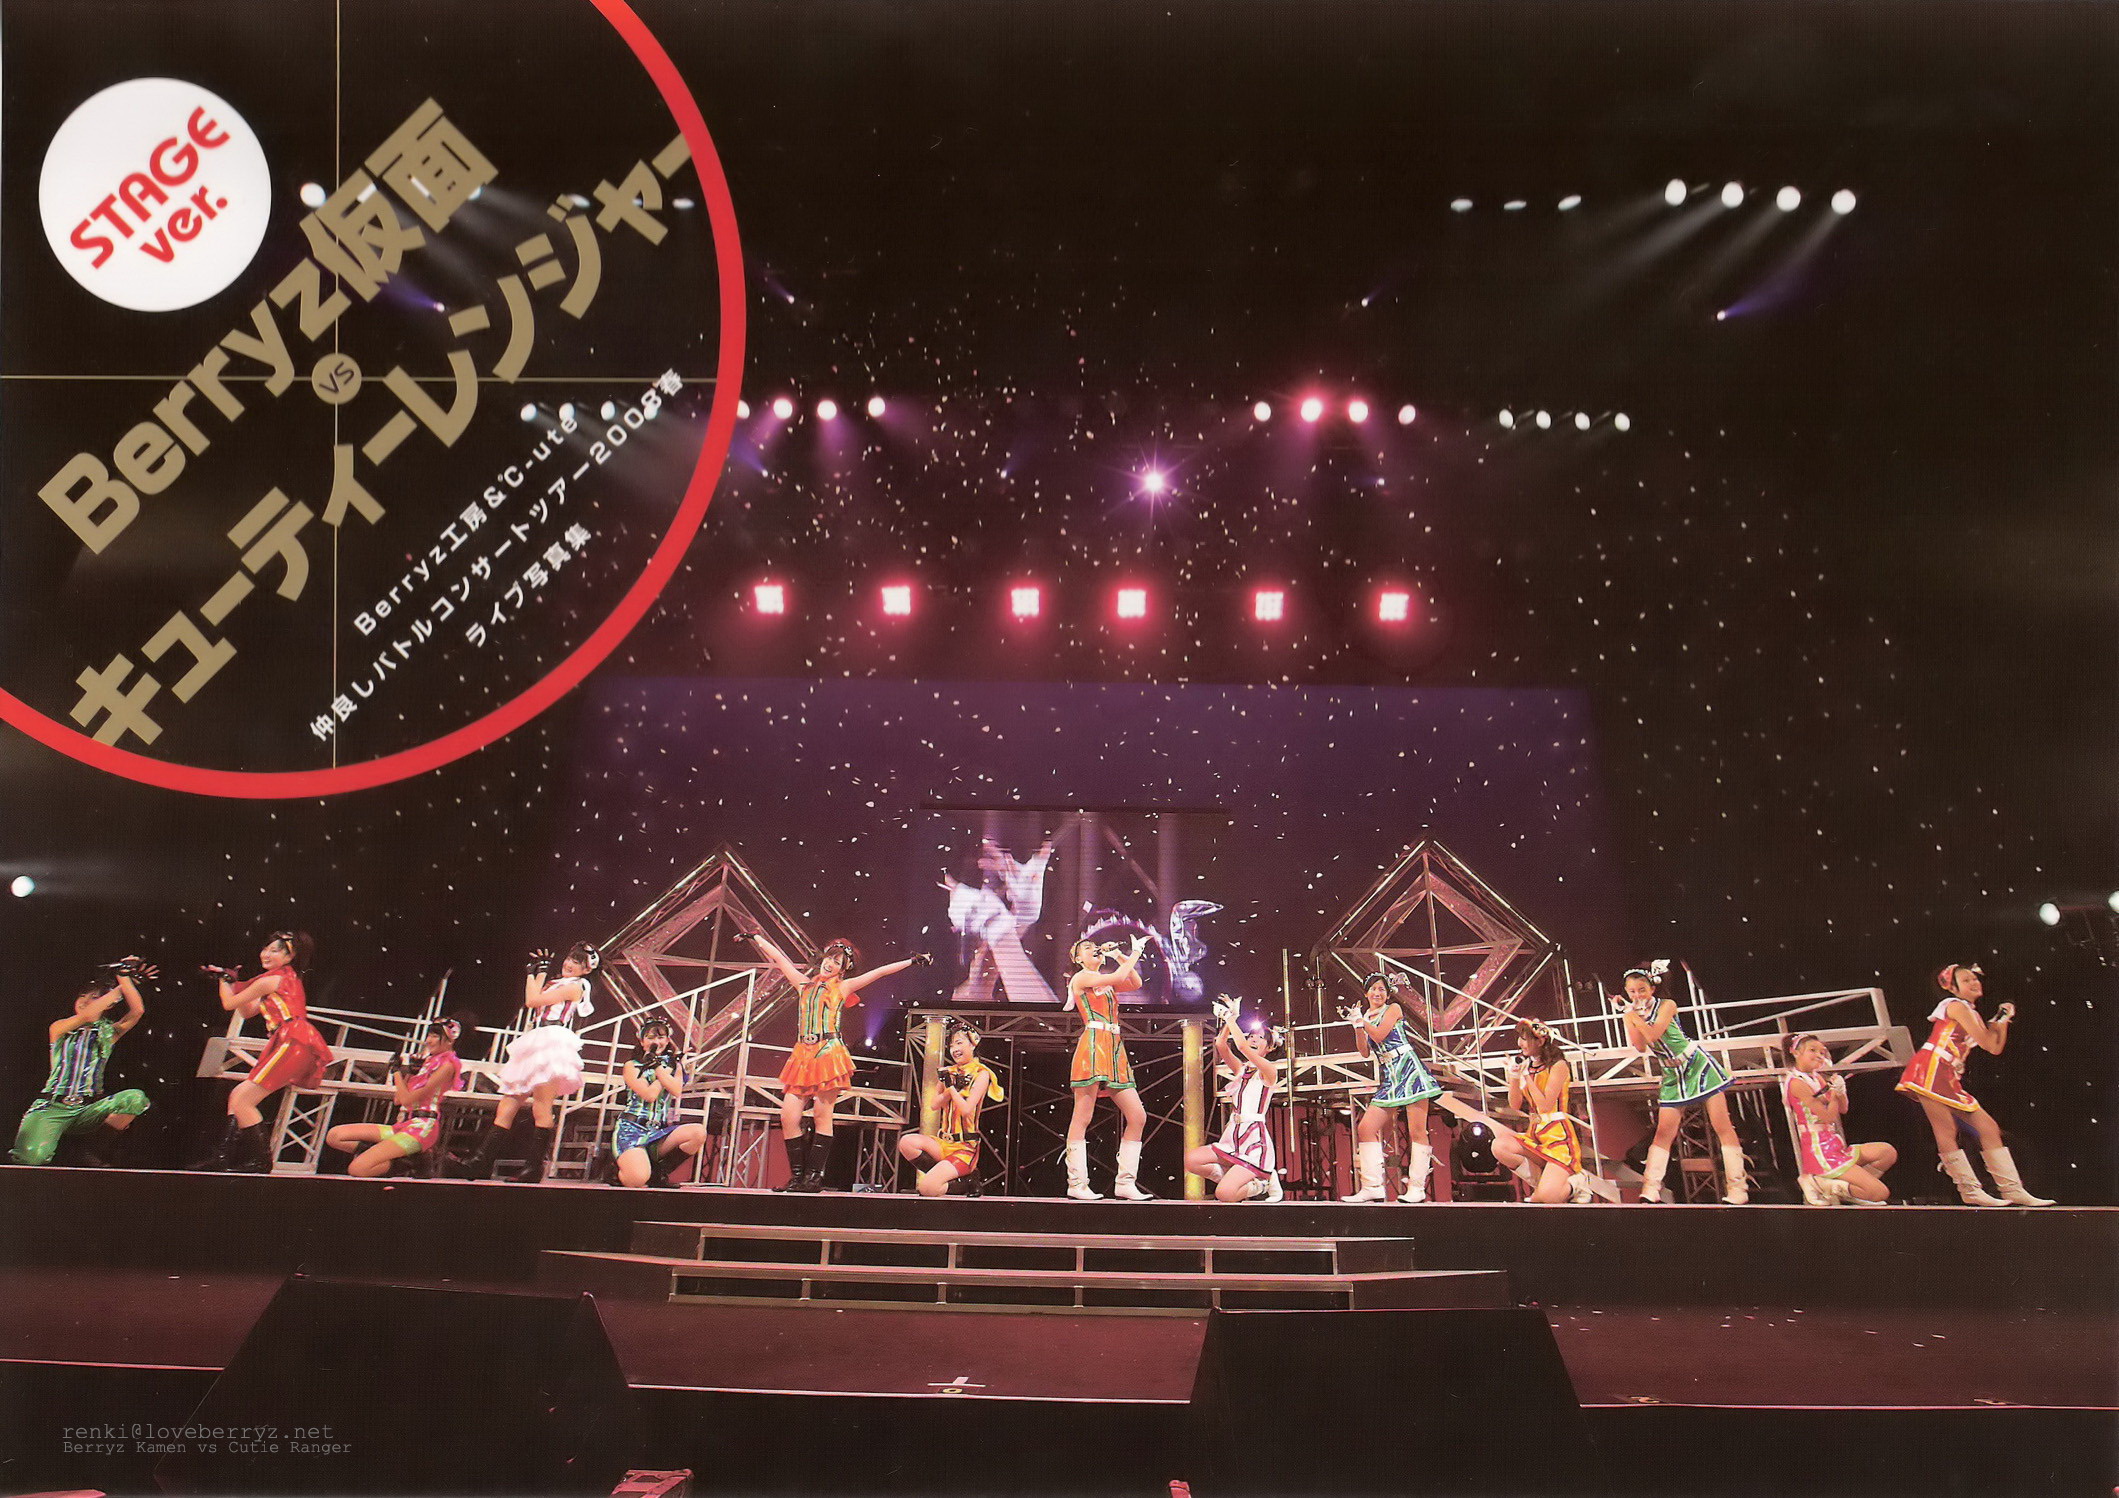 Berryz Koubou u0026 ℃-ute Nakayoshi Battle Concert Tour 2008 Haru ~Berryz Kamen  vs Cutie Ranger~ | Hello! Project Wiki | Fandom